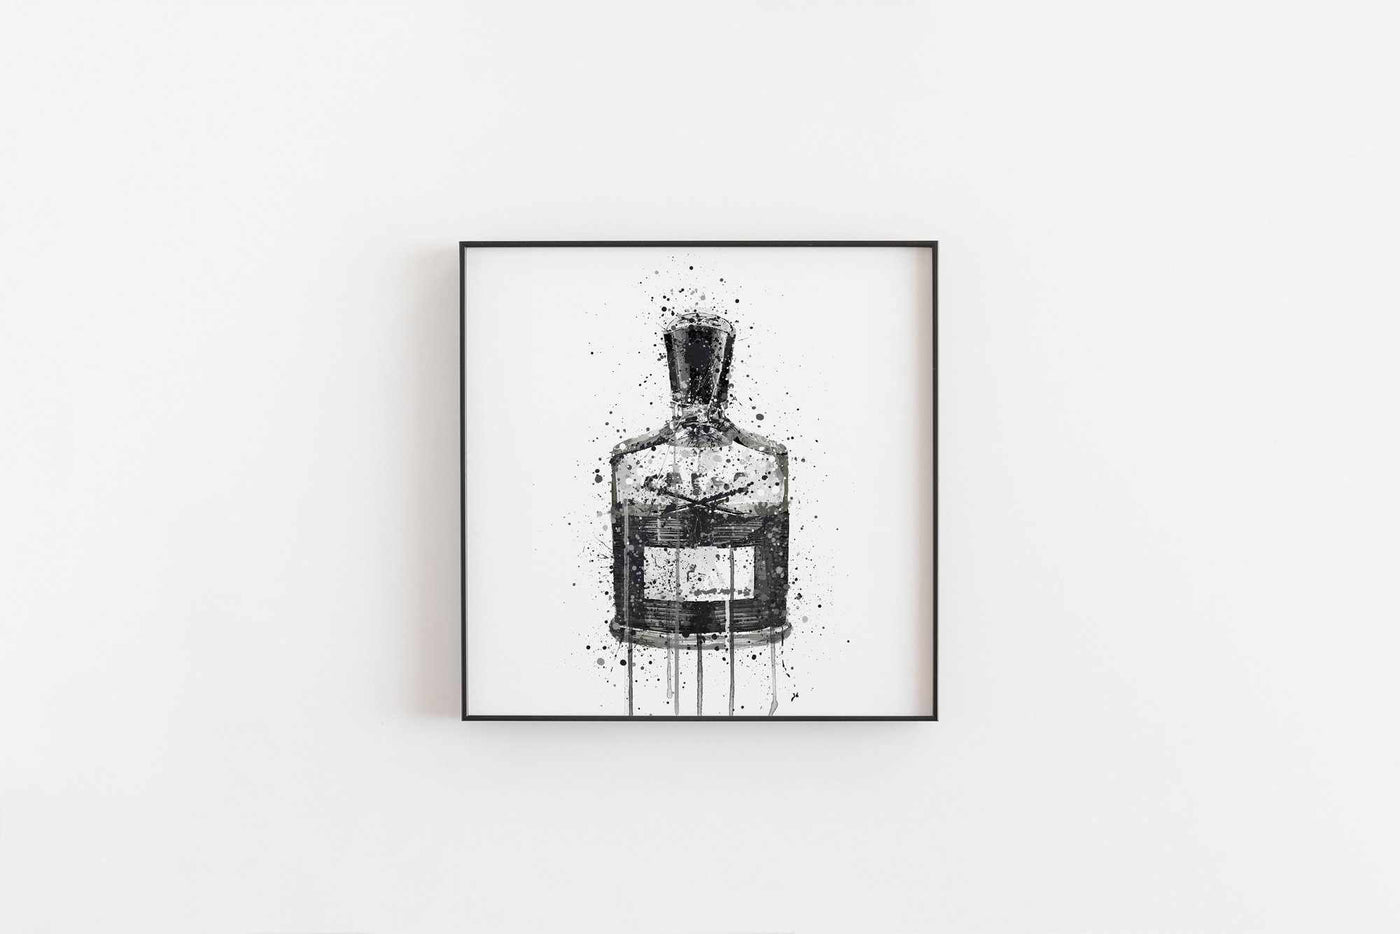 Fragrance Bottle Wall Art Print 'Granite'-We Love Prints